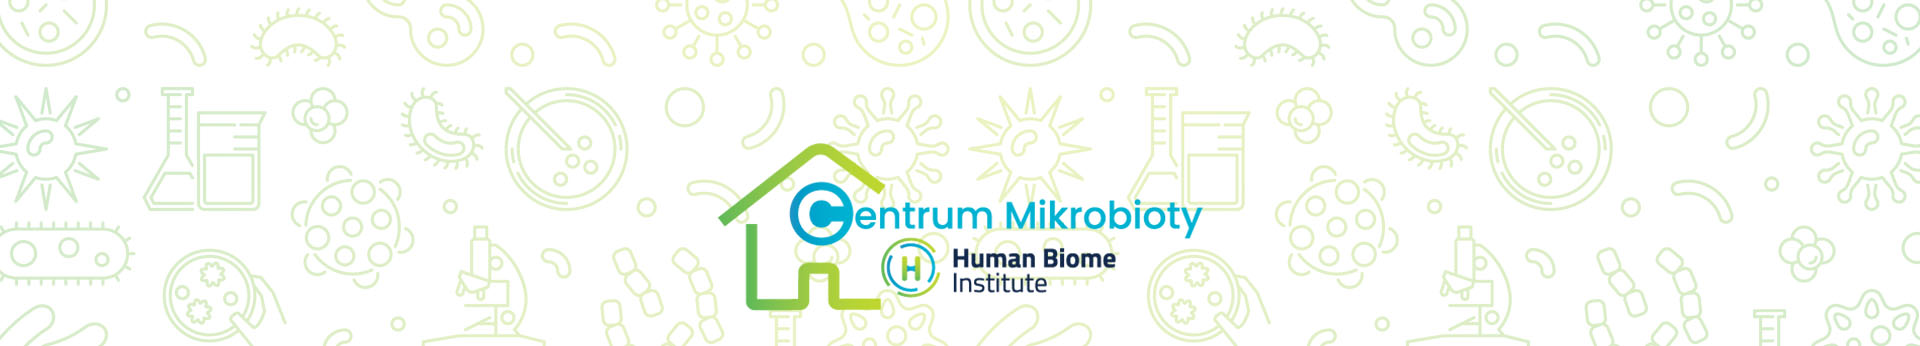 Centrum Mikrobioty